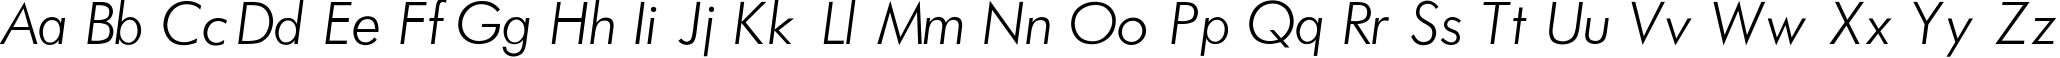 Пример написания английского алфавита шрифтом Futura_Light-Normal-Italic